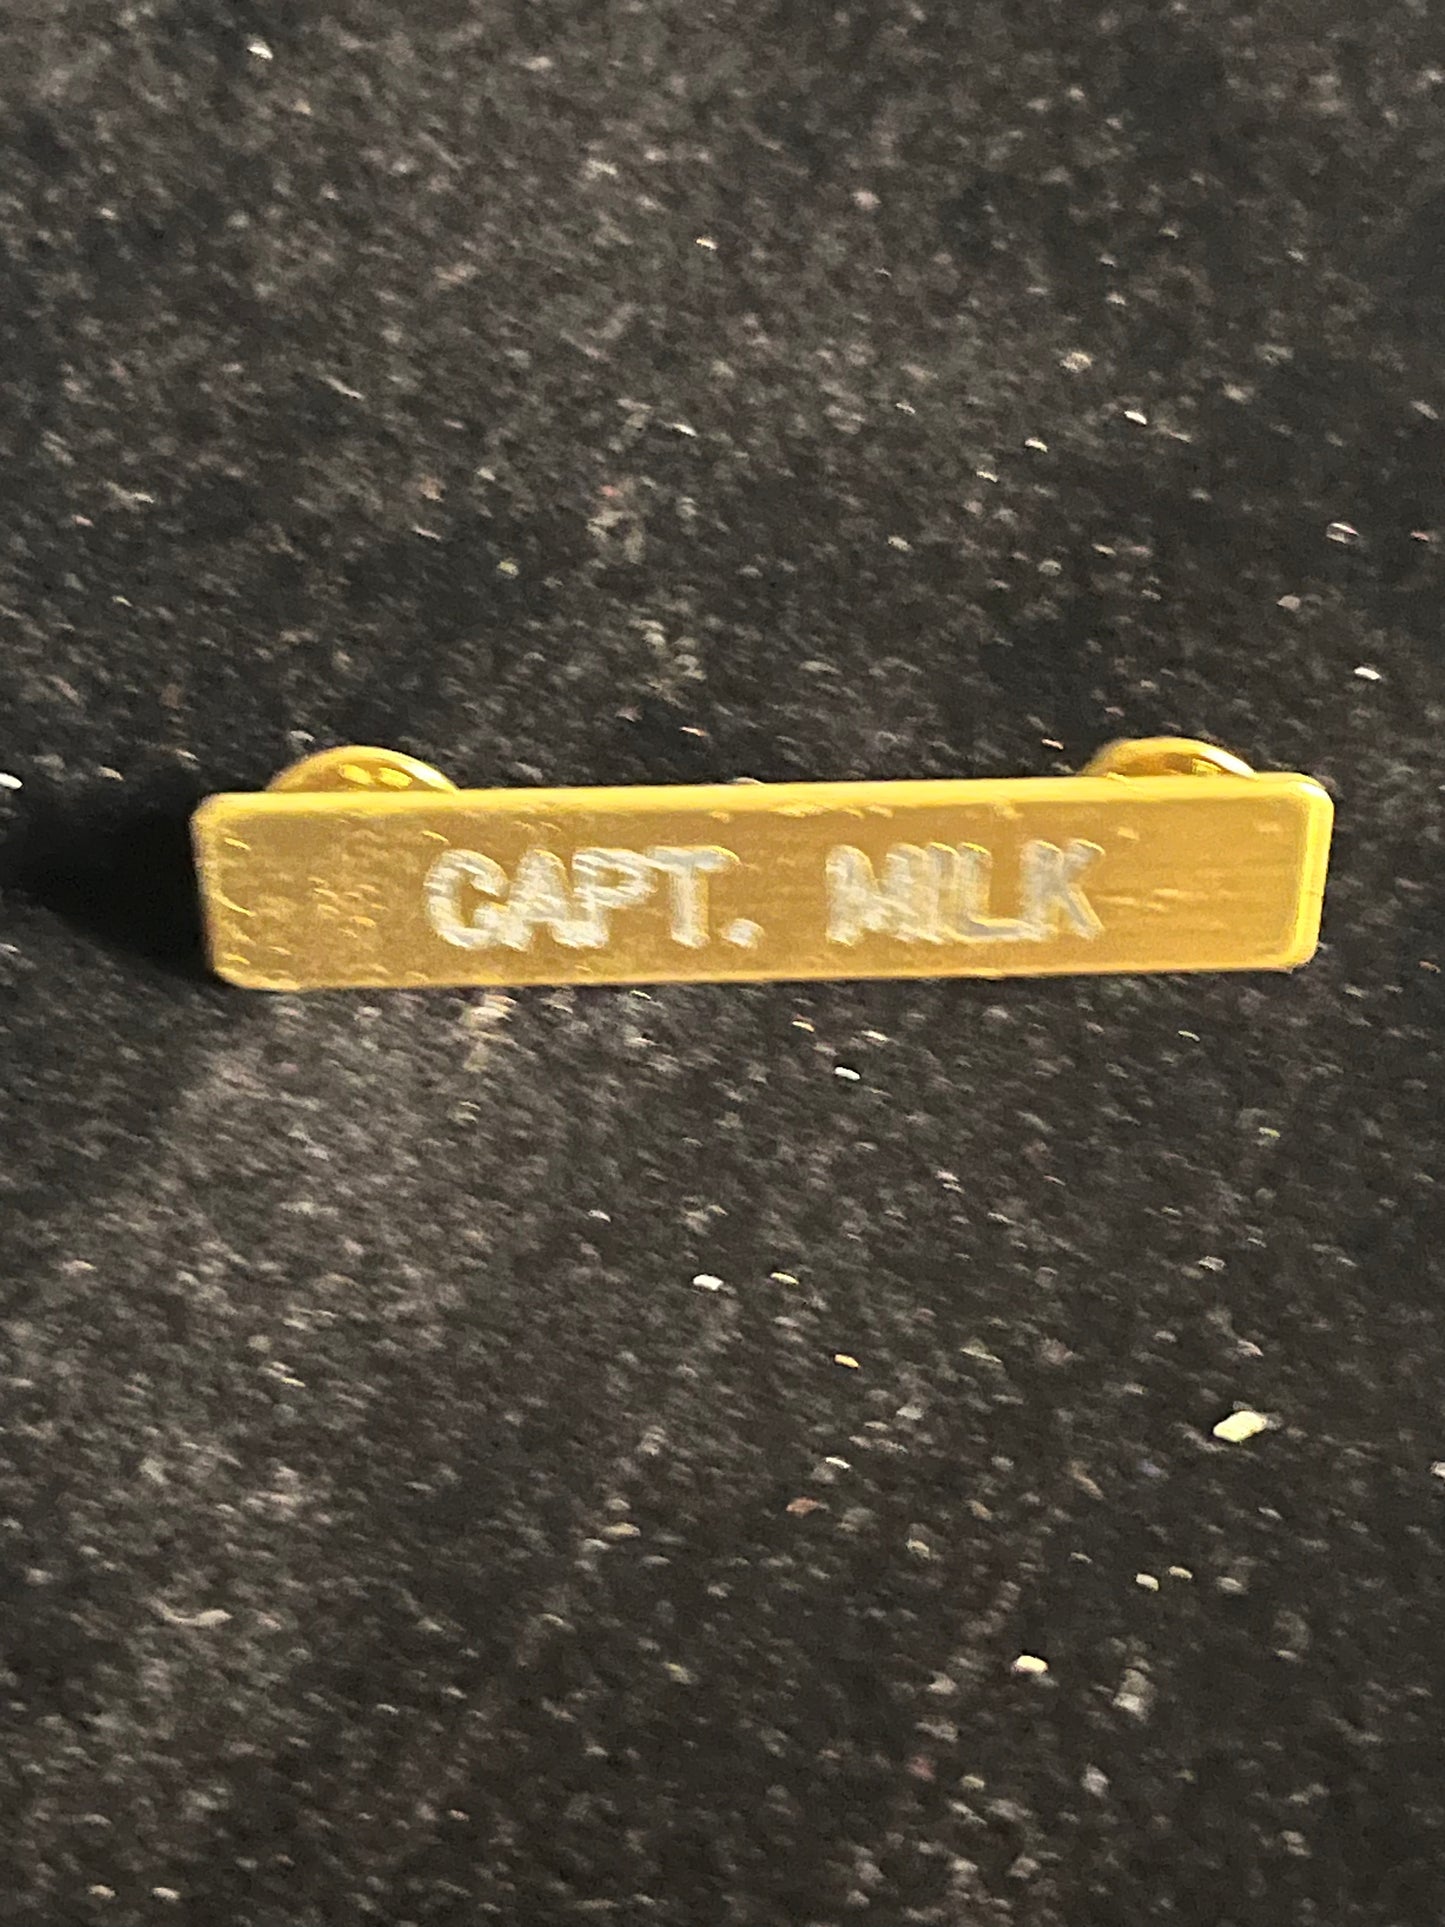 AHS: Capt. Milk Name tag